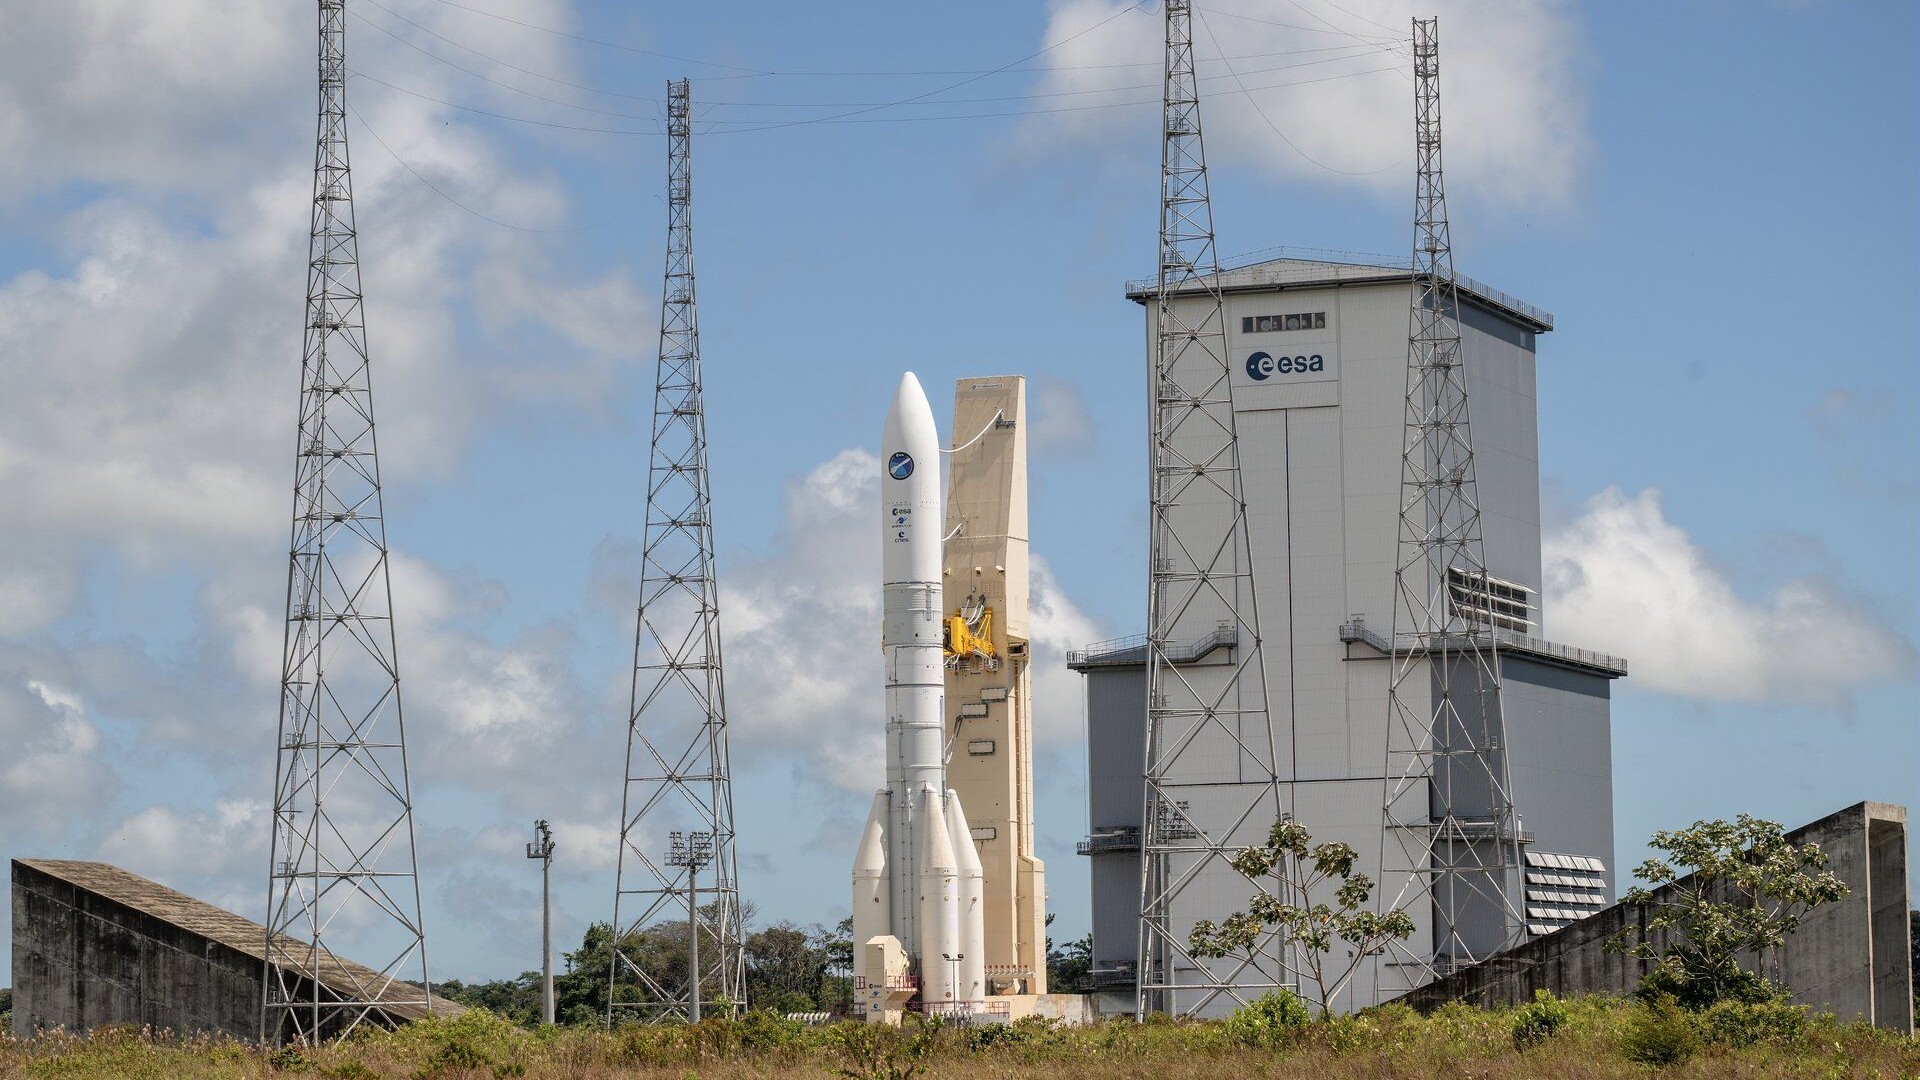 Europe’s new Ariane 6 rocket will undergo crucial engine test fire in November Space